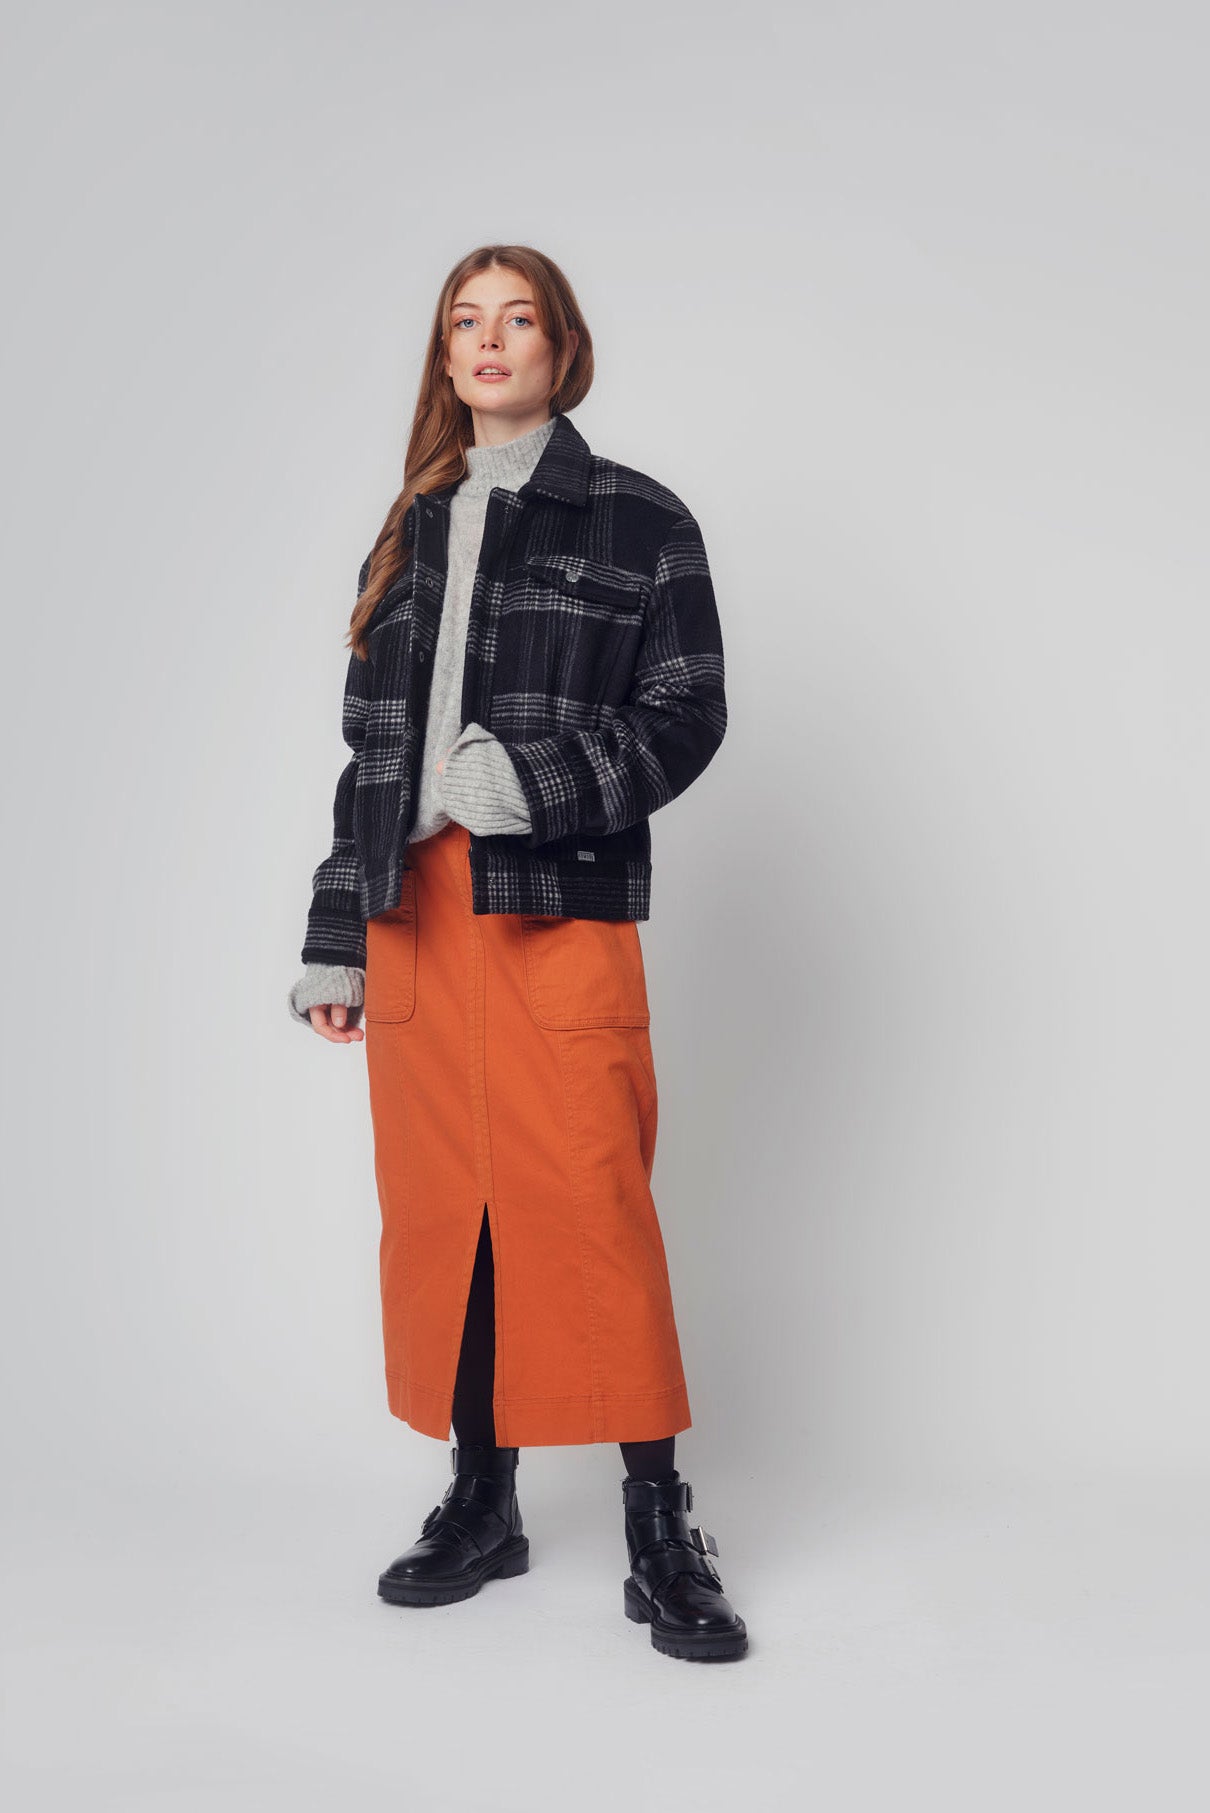 SORA Womens Organic Cotton Midi Skirt Brown, Size 1 / UK 8 / EUR 36